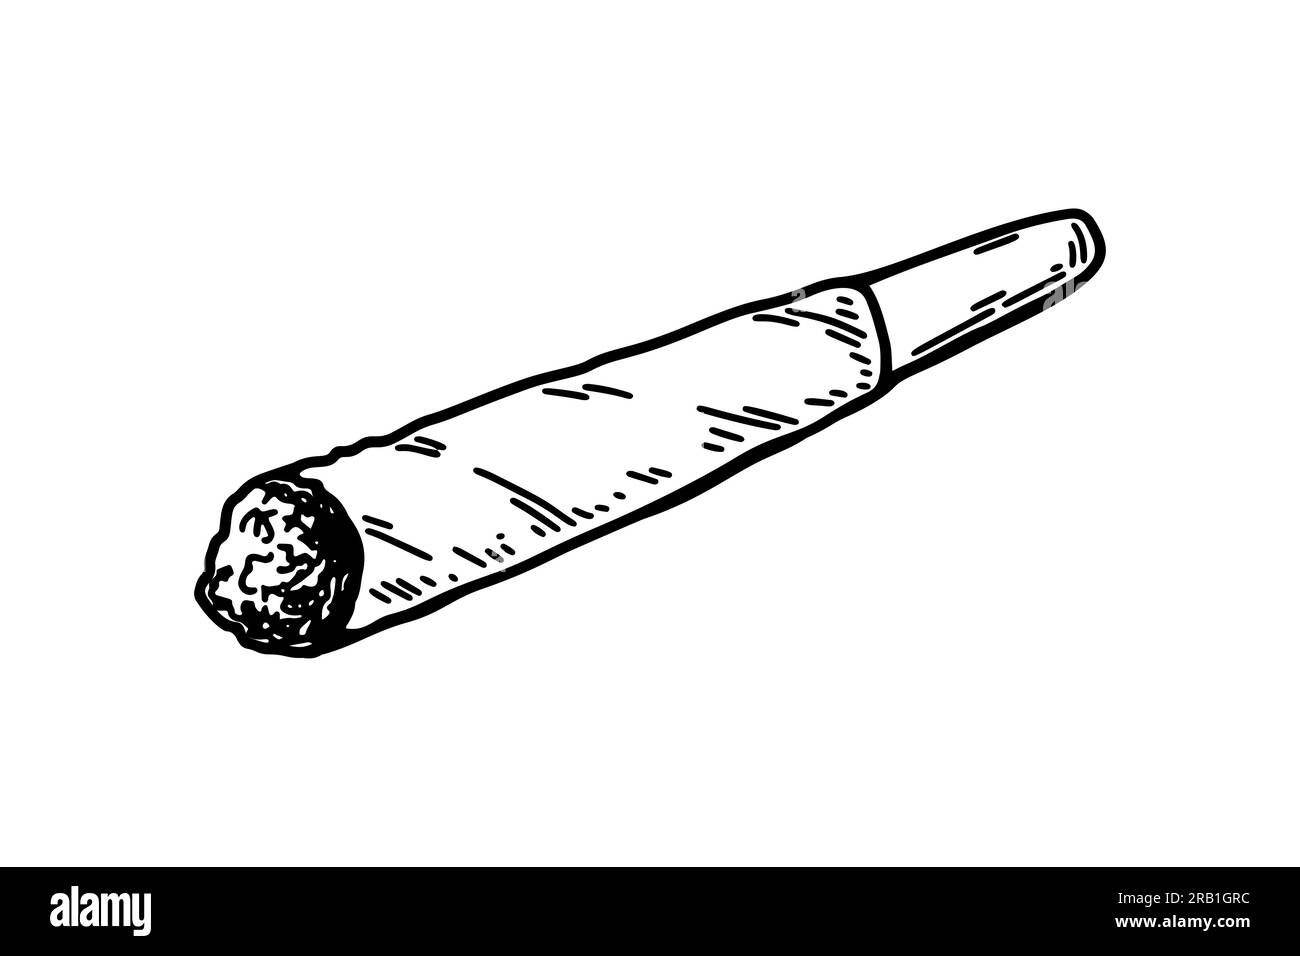 Cannabis joint. Hand drawn vector illustration in sketch style. Marijuana spliff Stock Vector